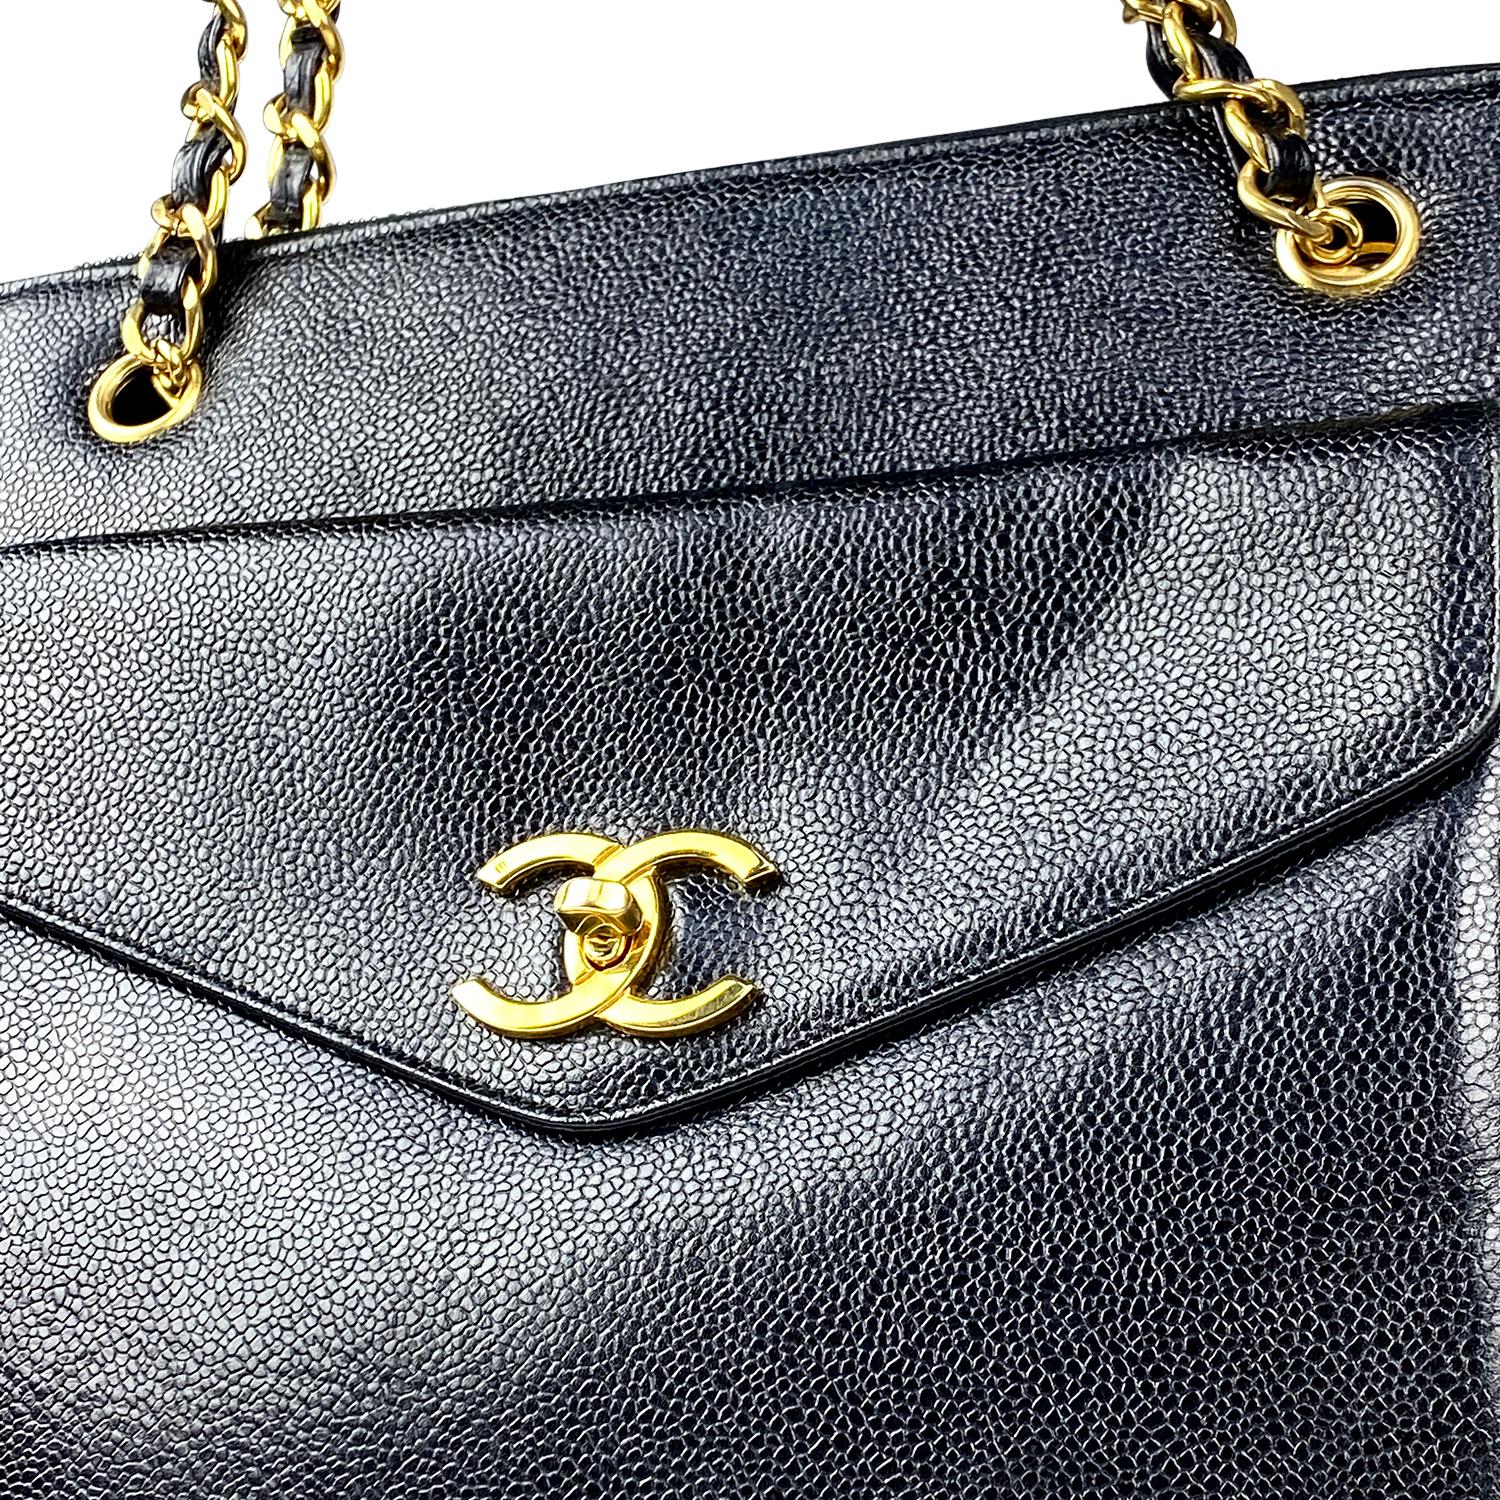 Chanel Caviar CC Tote Crossbody Bag For Sale 3